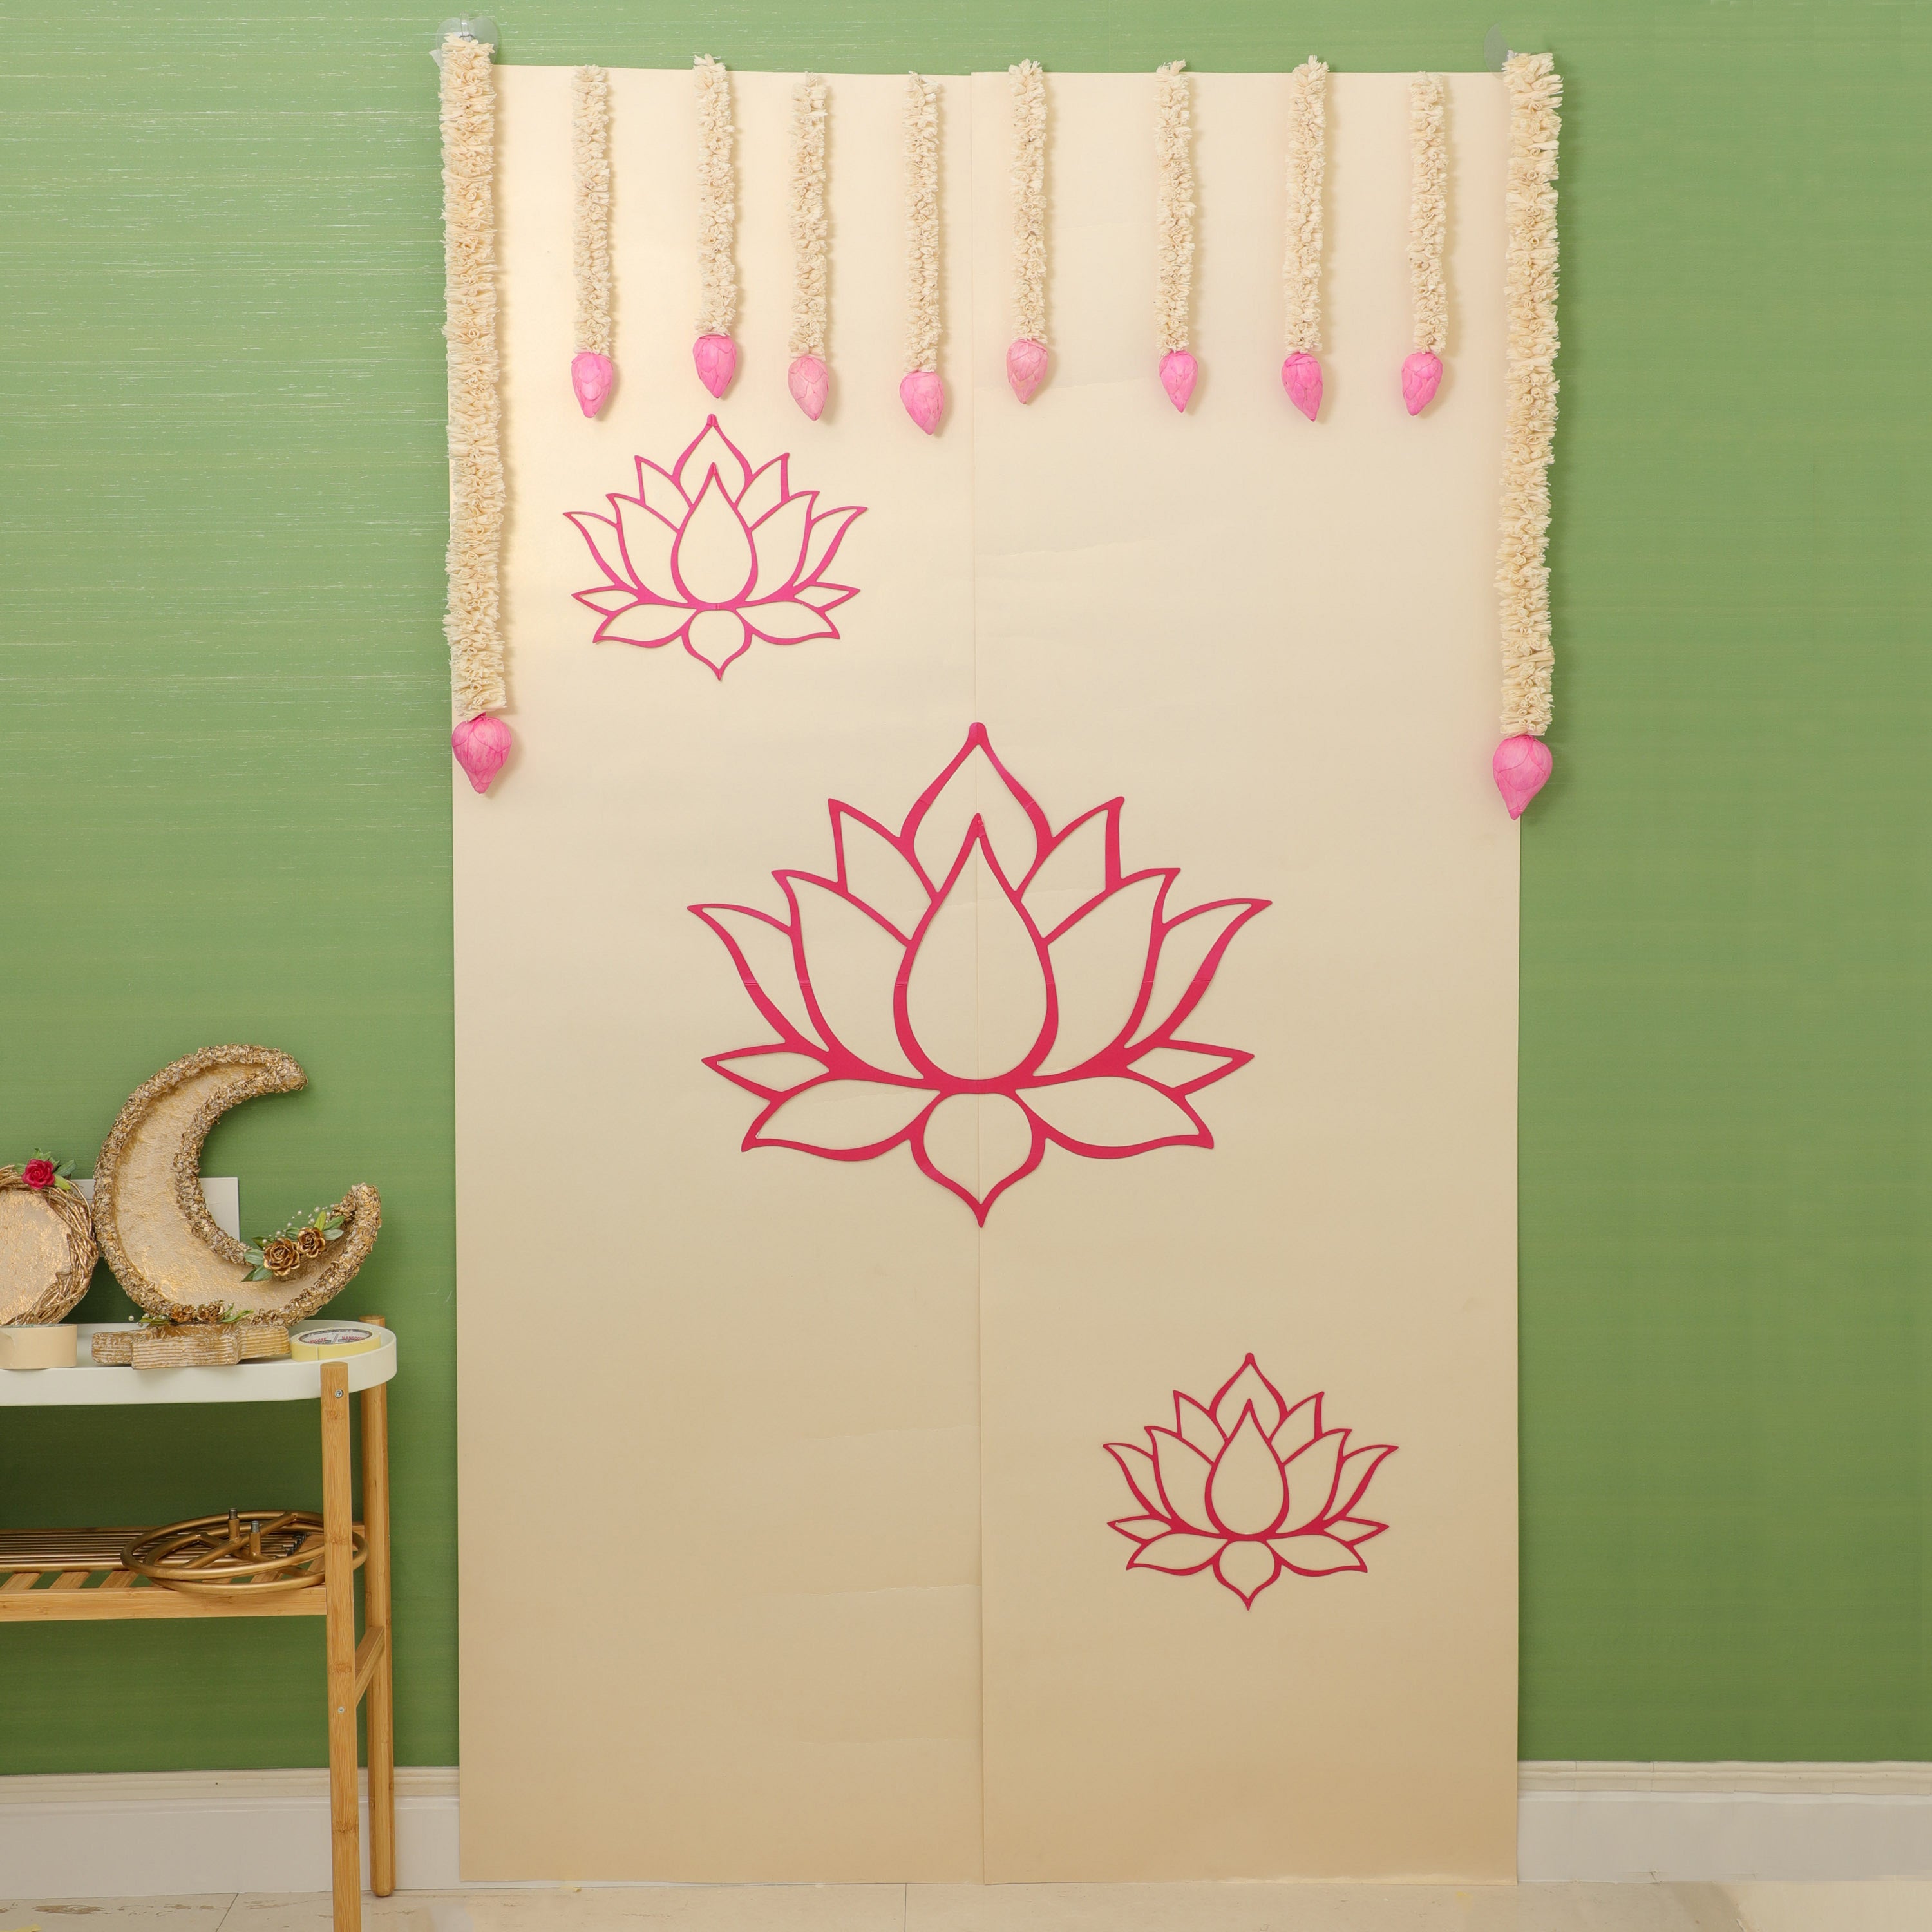 Lotus Theme Varalakshmi Vratham Decoration online in the USA